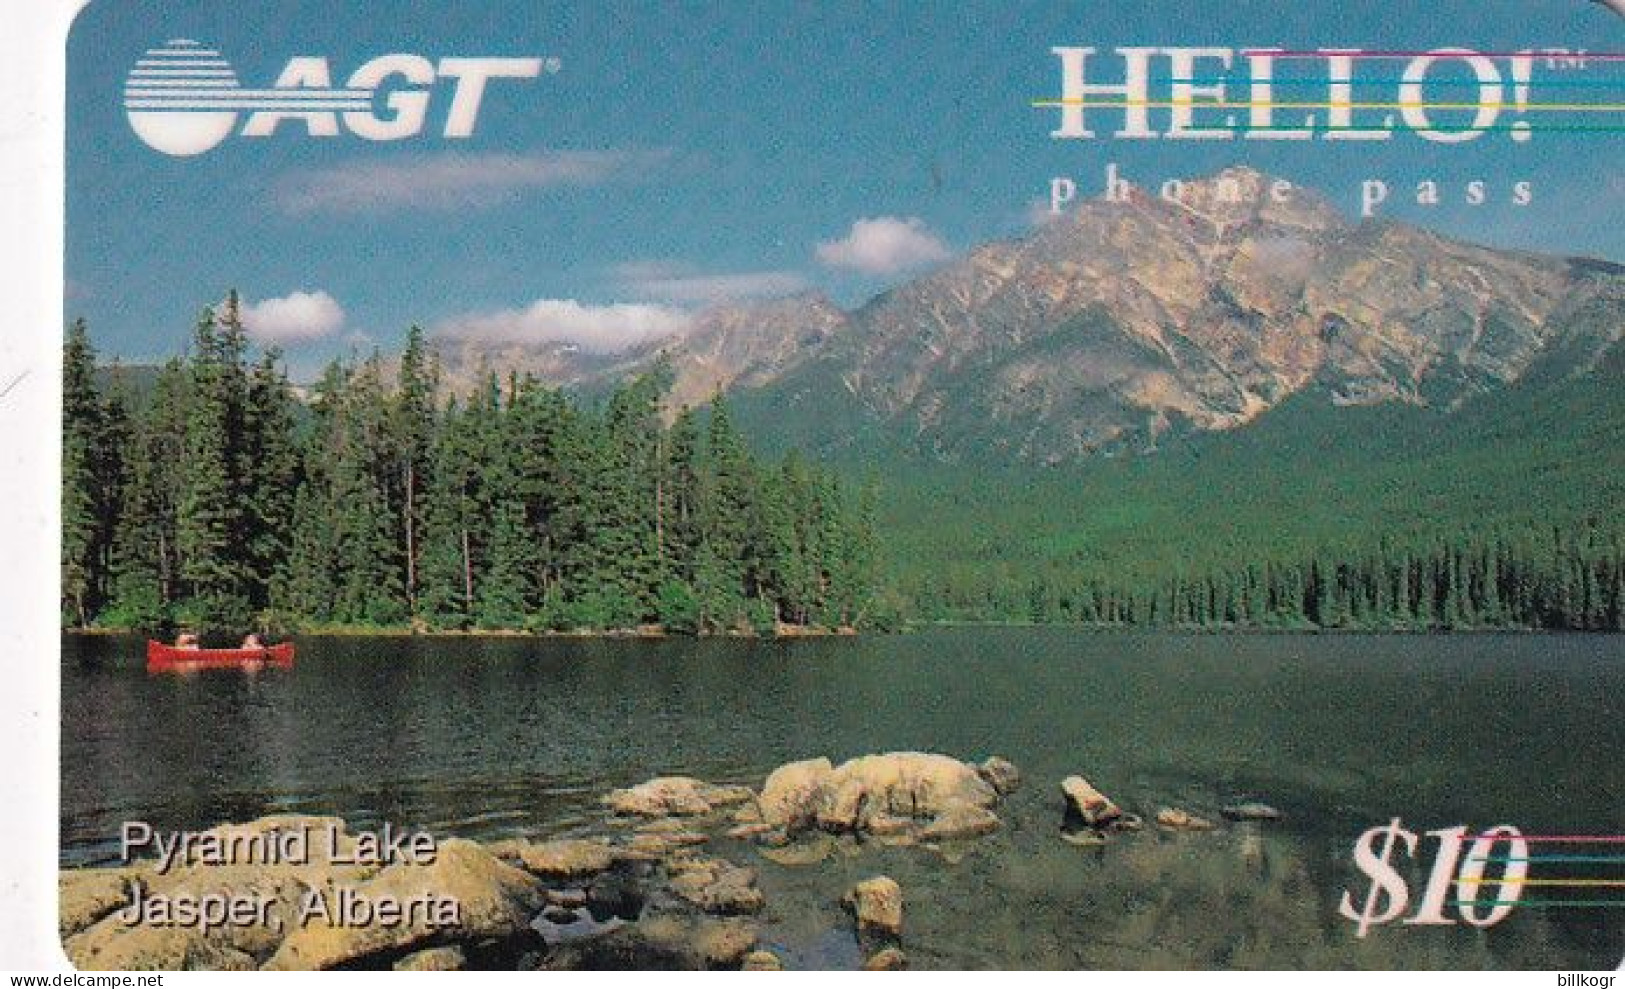 CANADA - Pyramid Lake, Jasper/Alberta, AGT Prepaid Card $10, Used - Canada